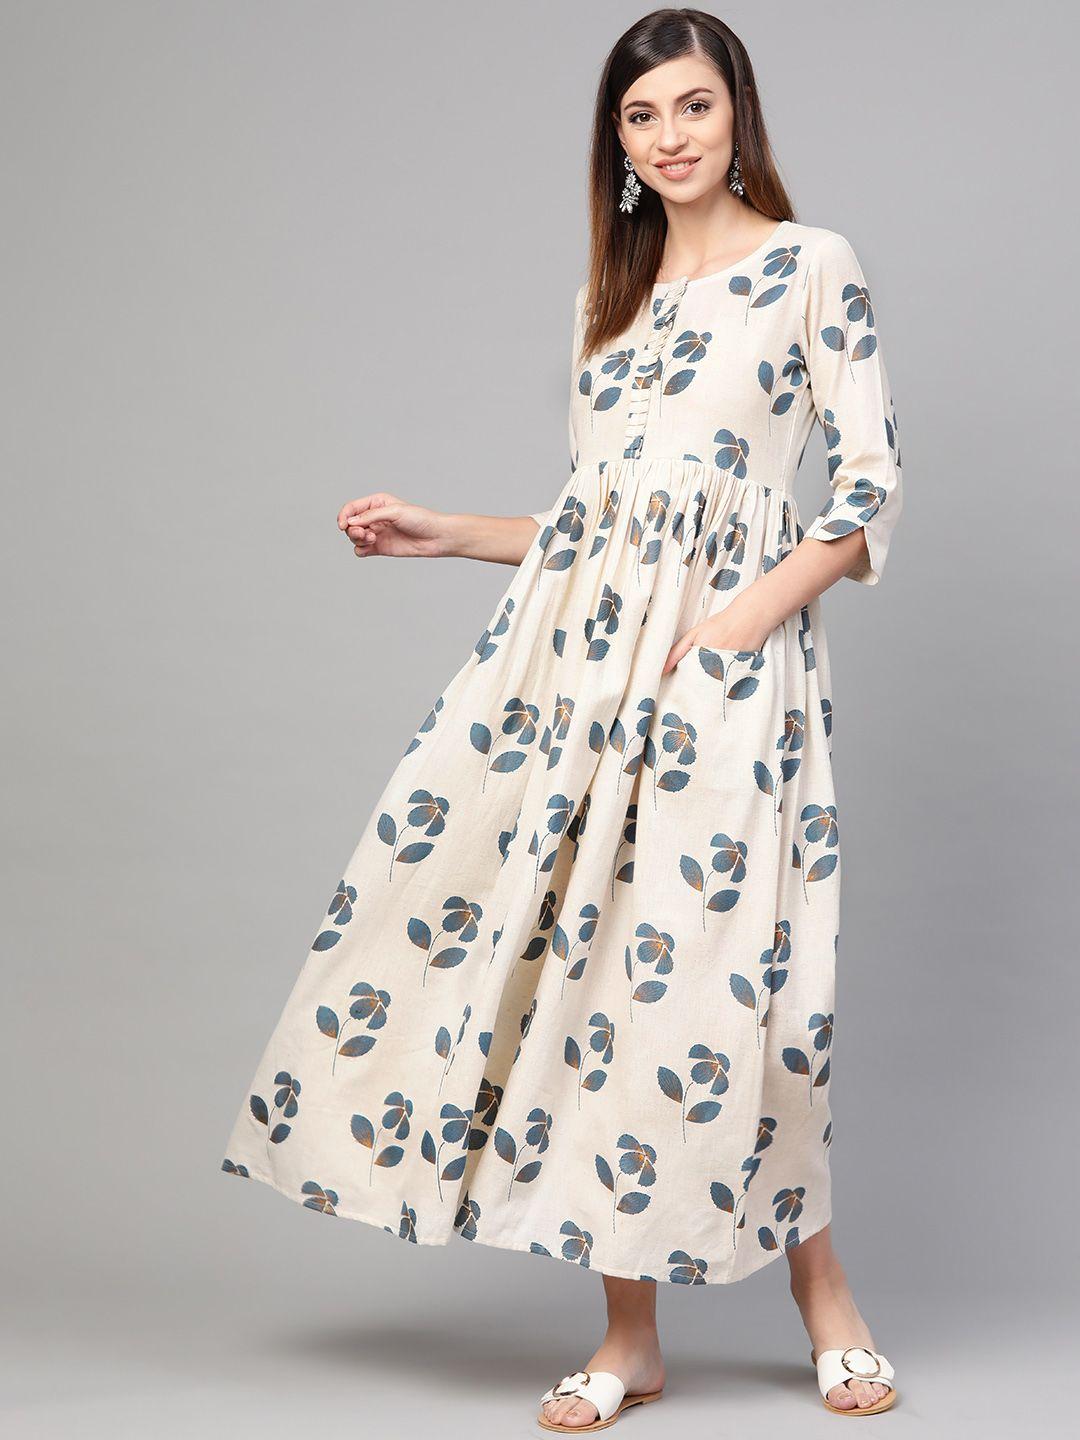 idalia women off-white & blue floral printed maxi dress